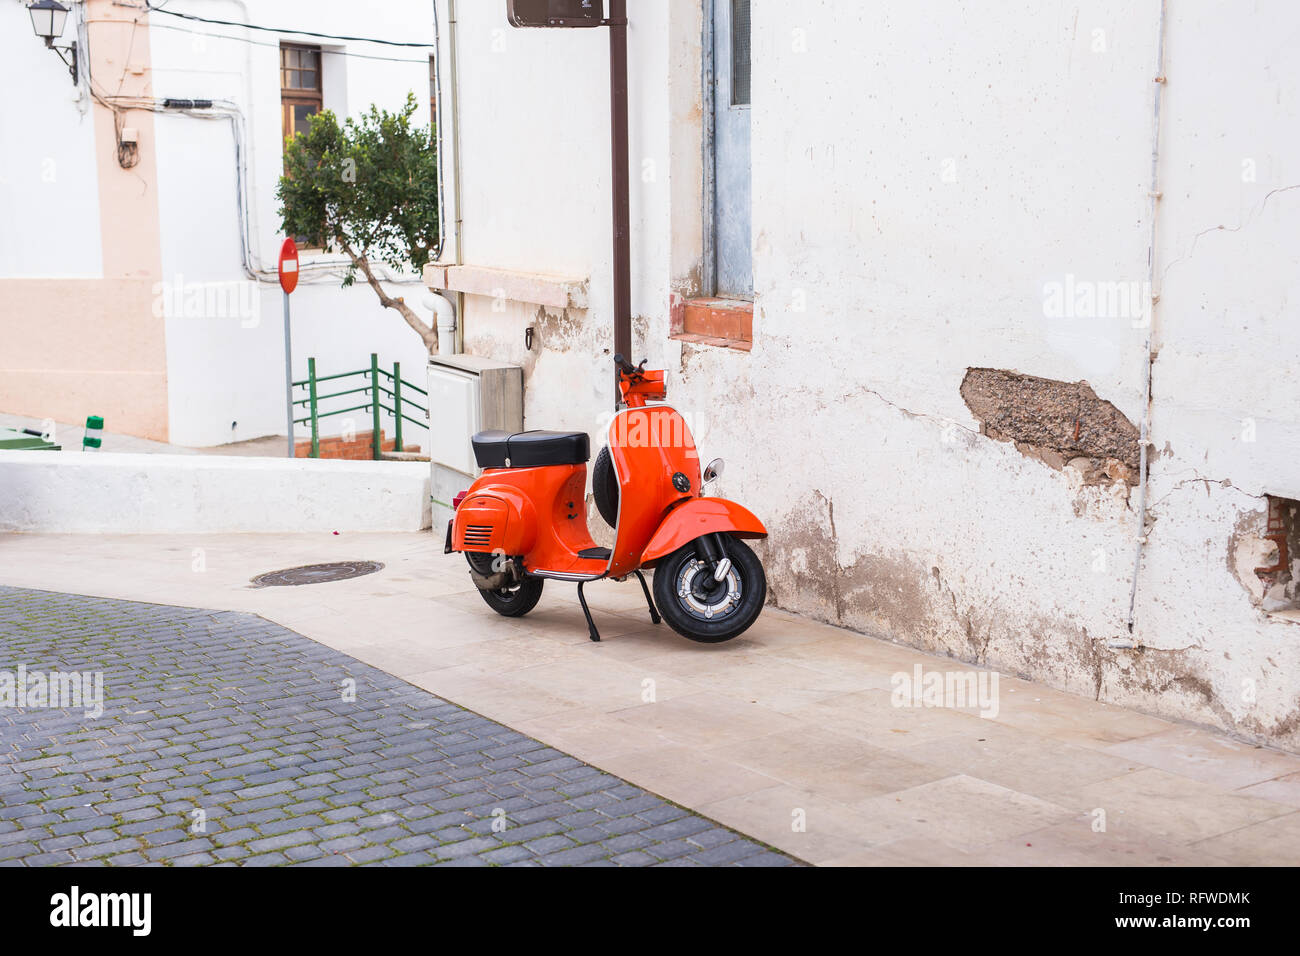 Barcelona, Spanien - 13. Januar 2018: Orange Scooter Vespa auf der alten Straße in Barcelona, Spanien geparkt Stockfoto